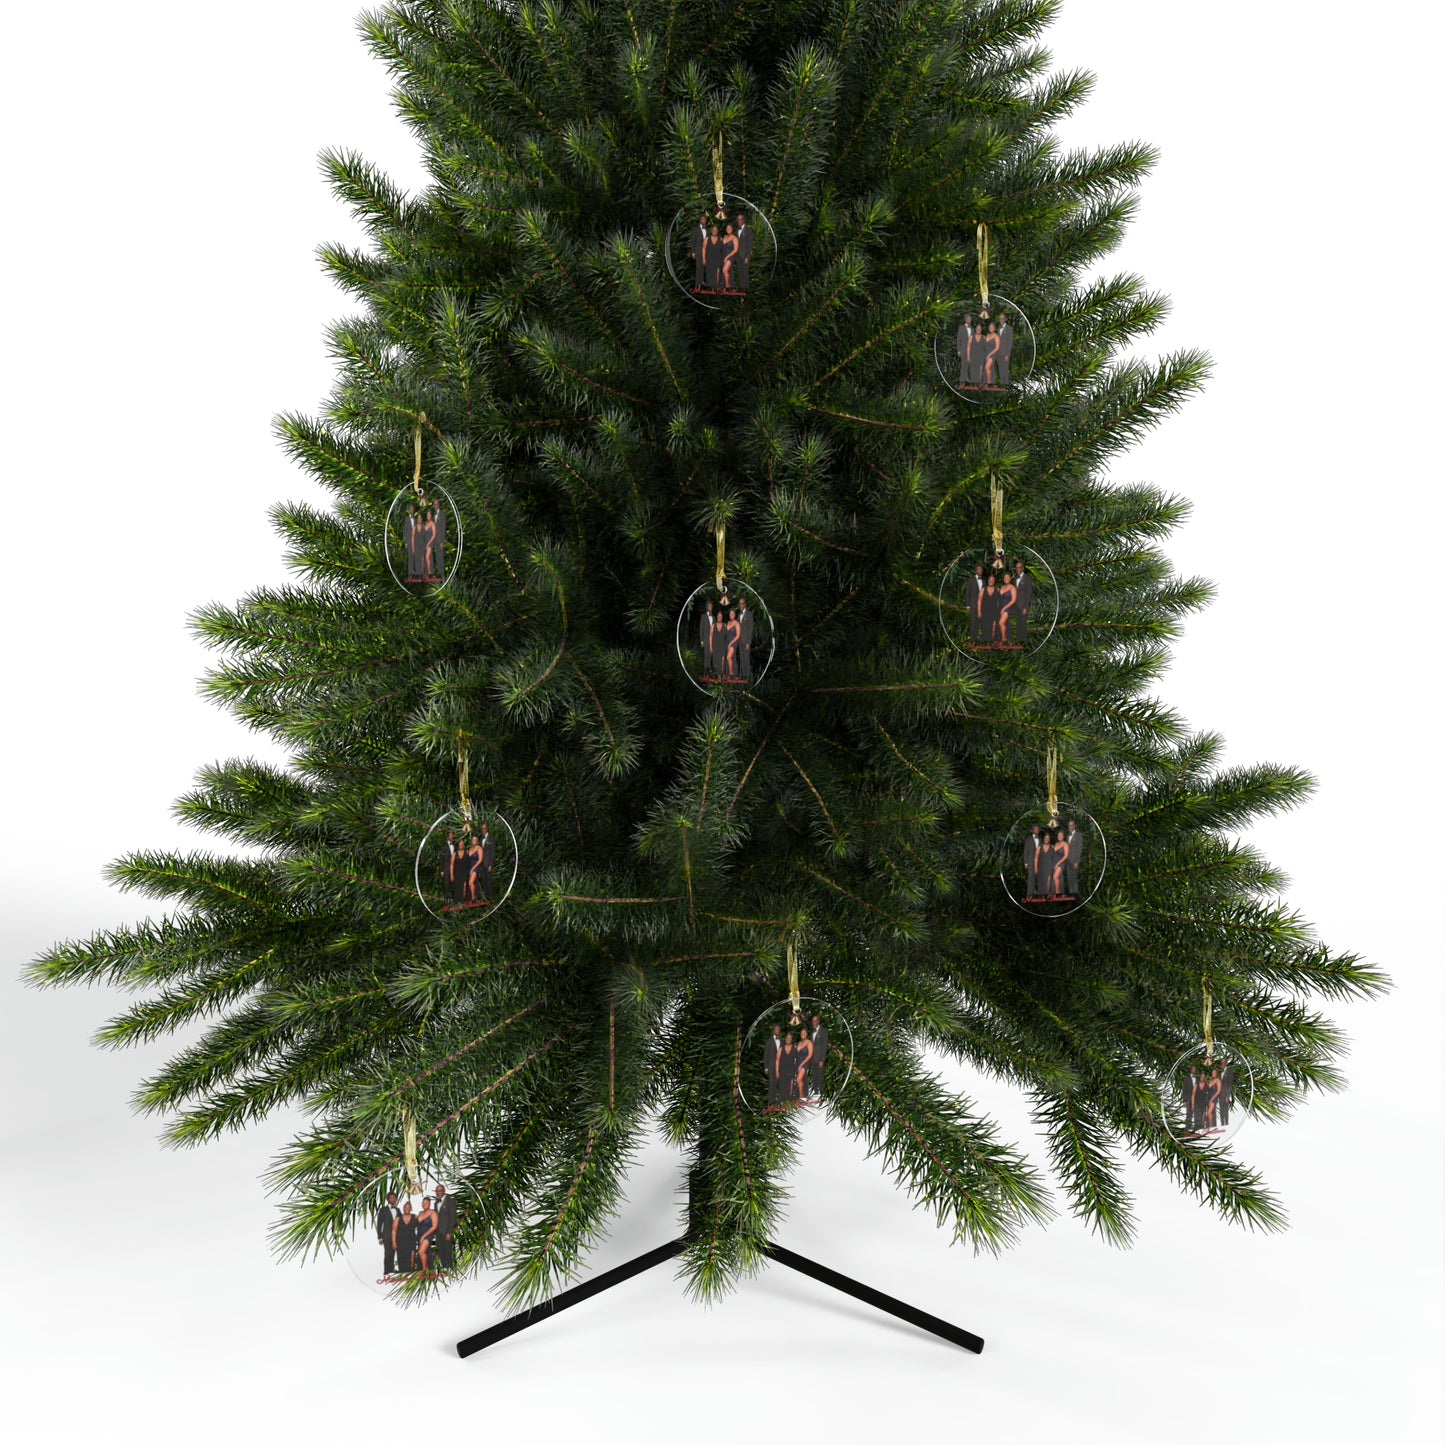 Merrick Christmas 2 | Personalized Acrylic Ornaments